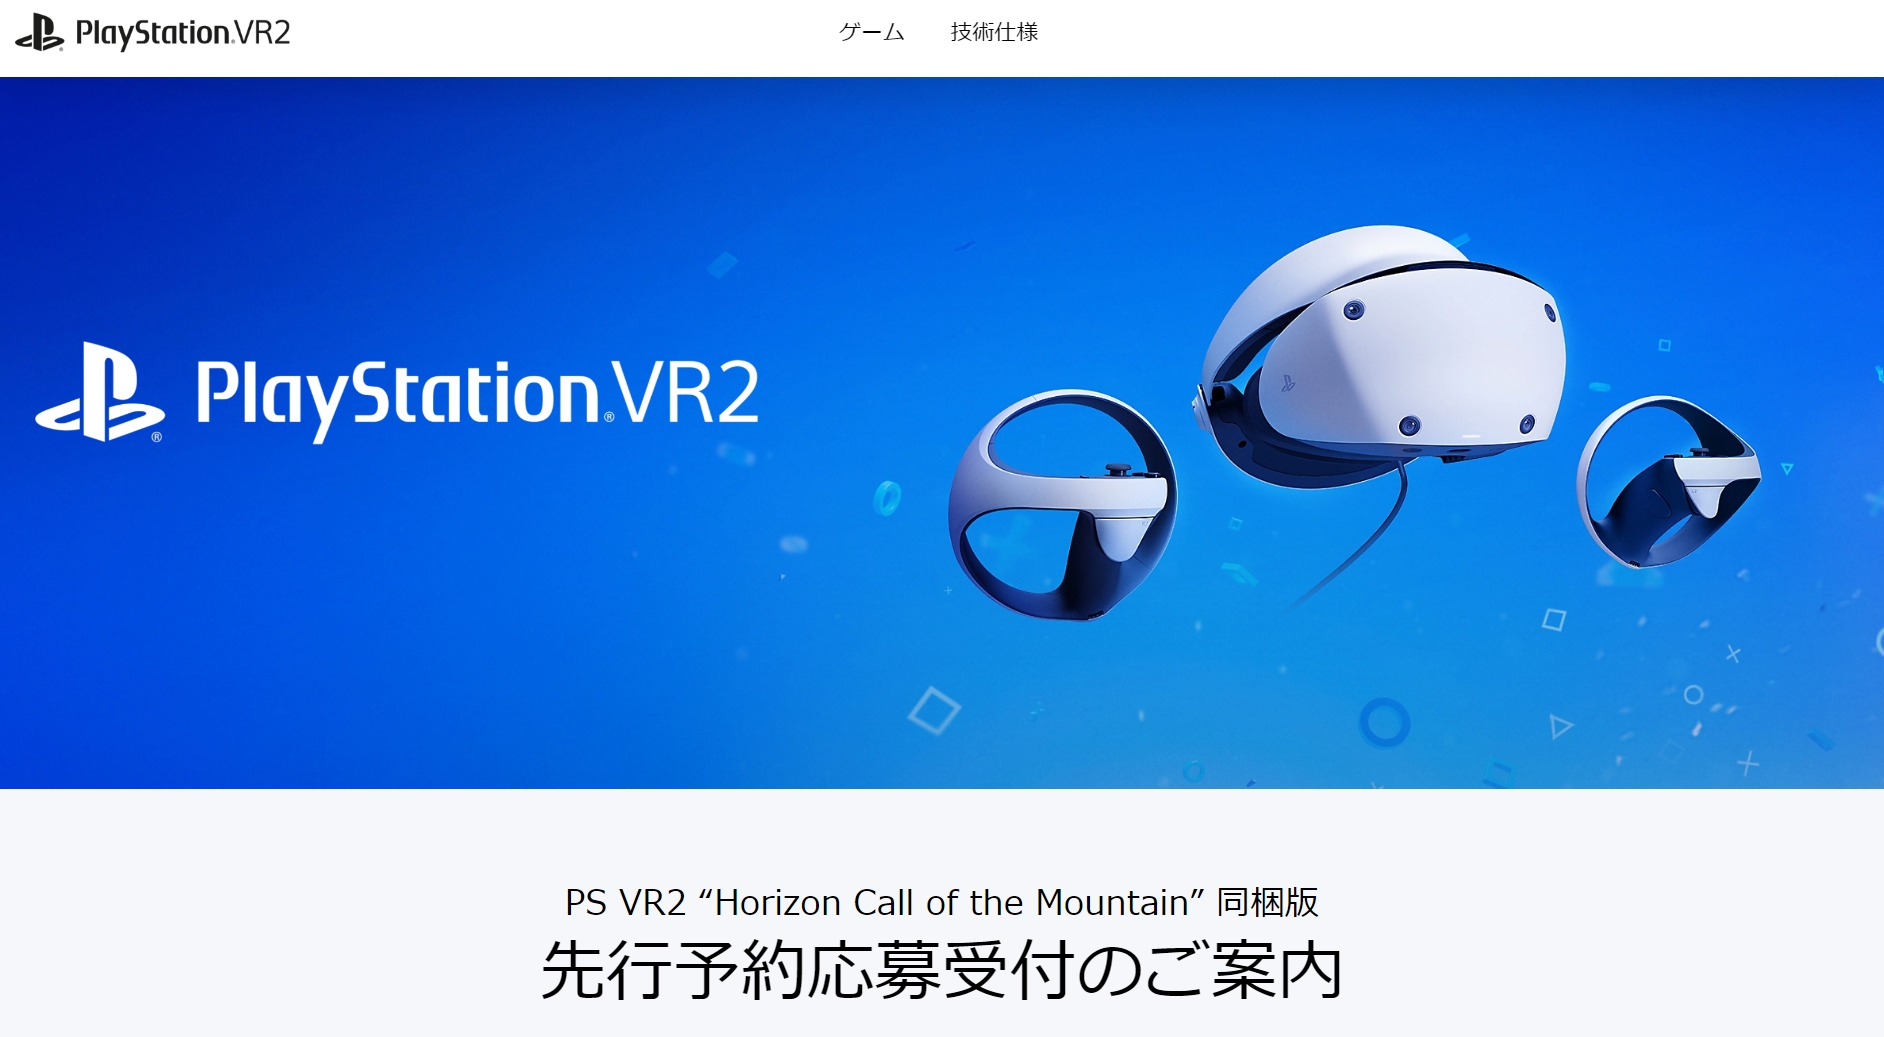 PS VR2 “Horizon Call of the Mountain” 同梱版 先行予約応募受付が 